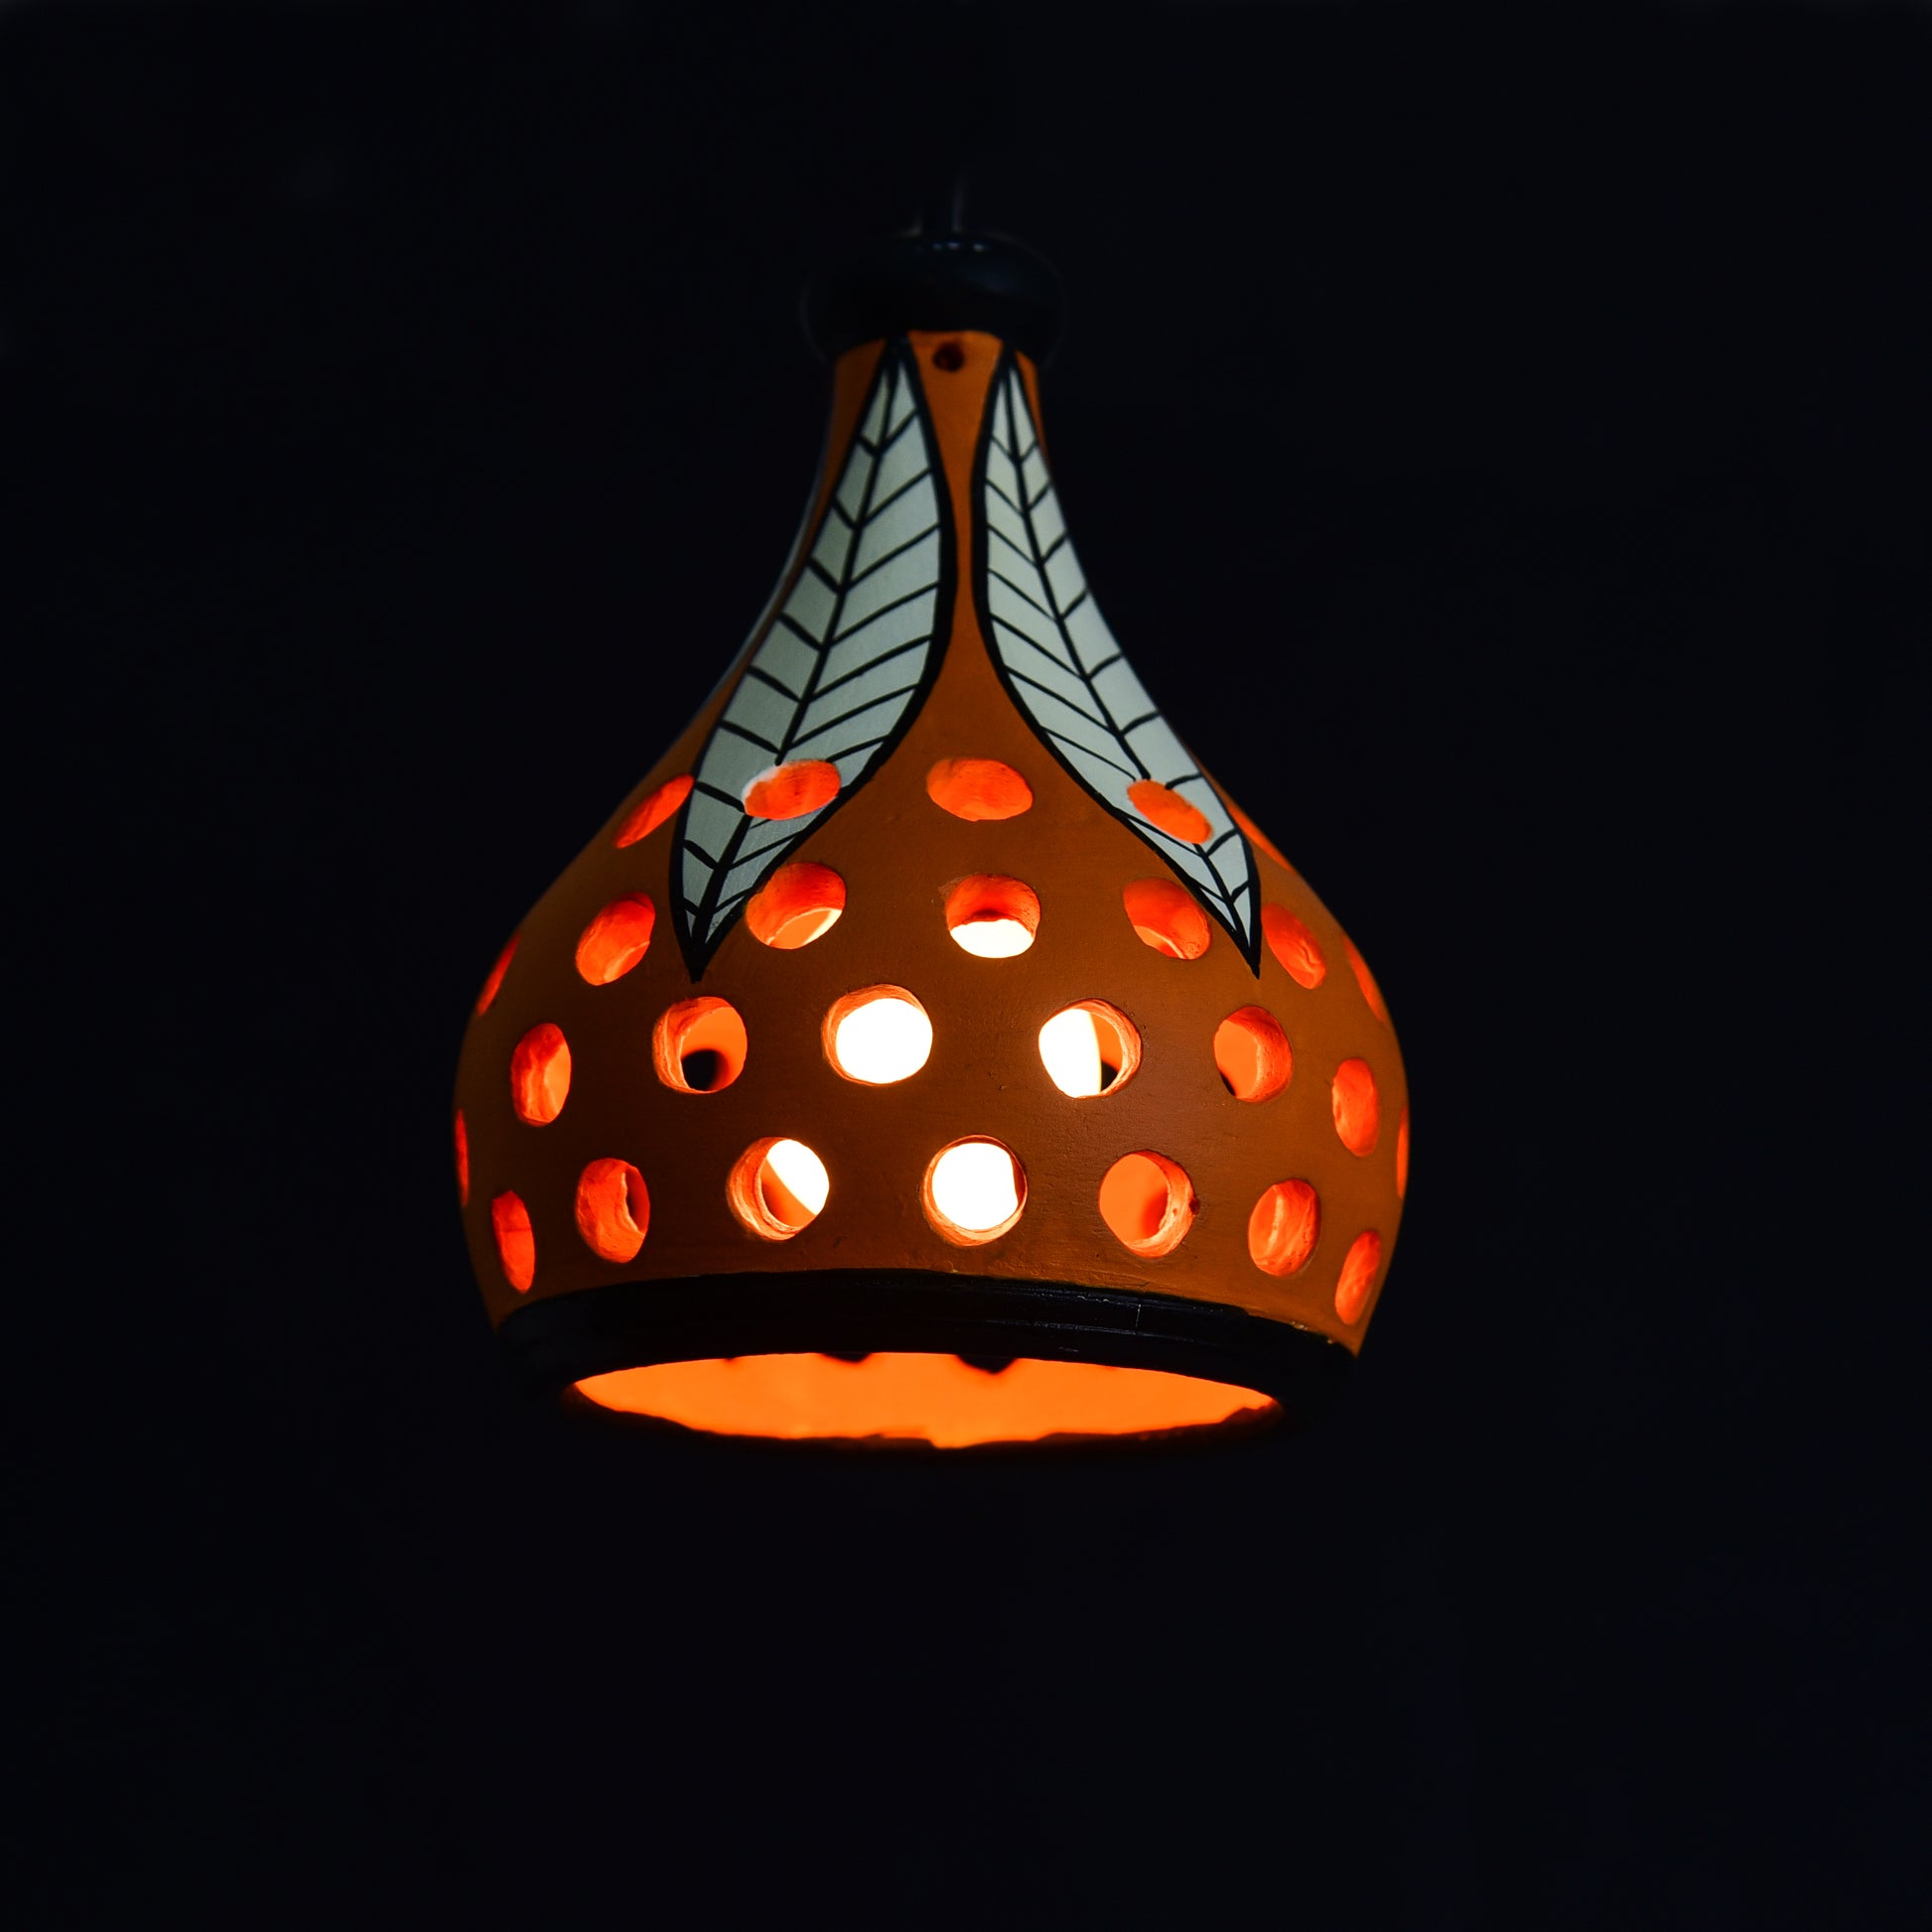 'Leafy Lantern' Terracotta Hand-painted Hanging Lamp (Orange & White)